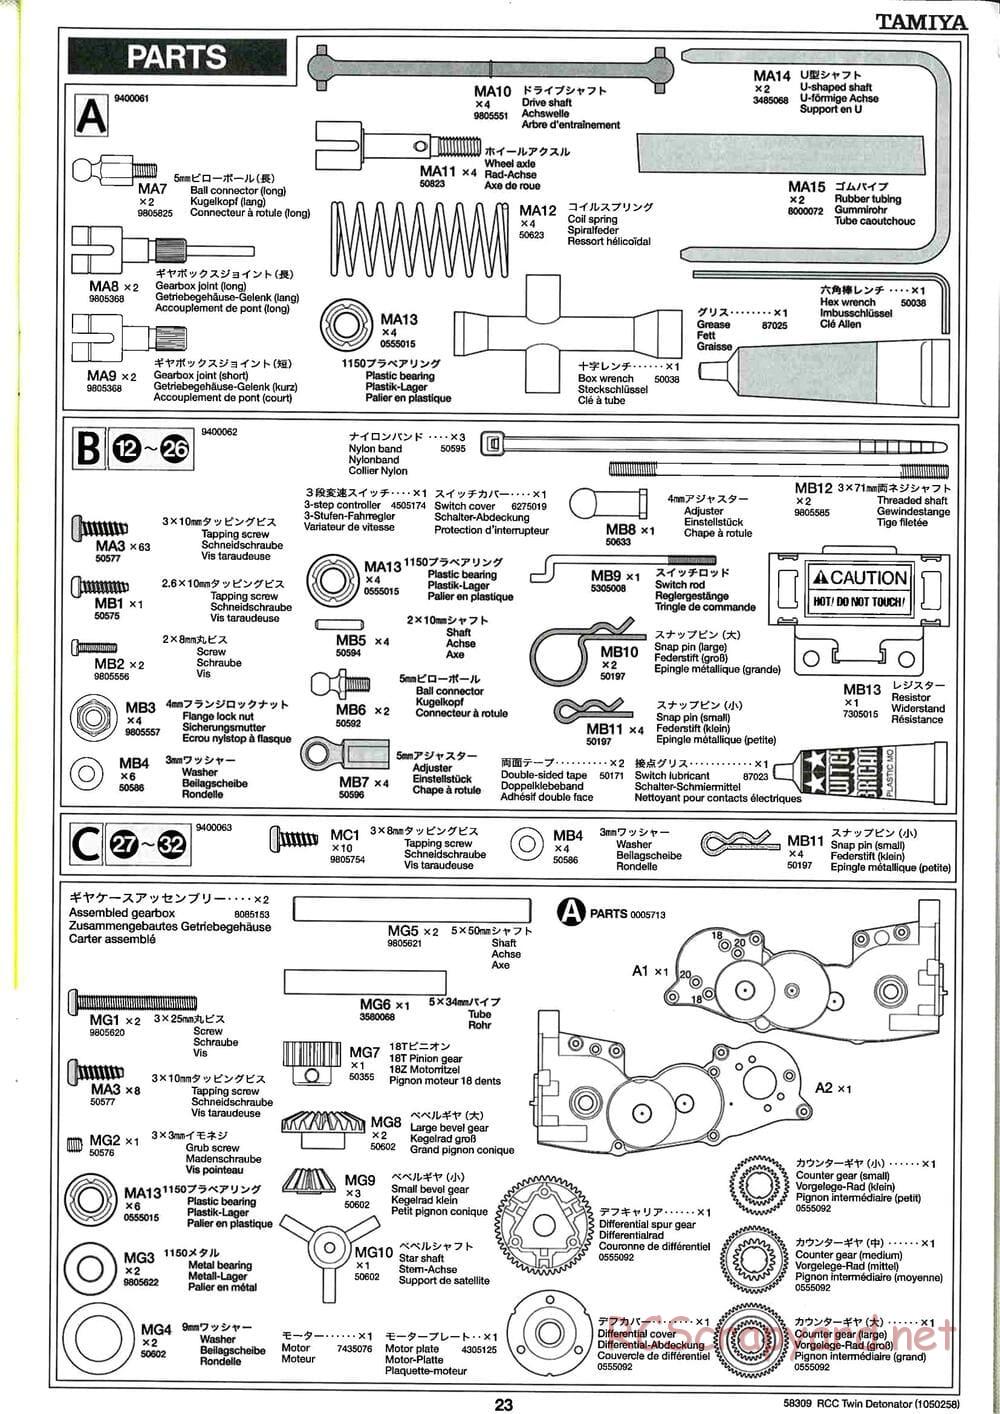 Tamiya - Twin Detonator - WR-01 Chassis - Manual - Page 23